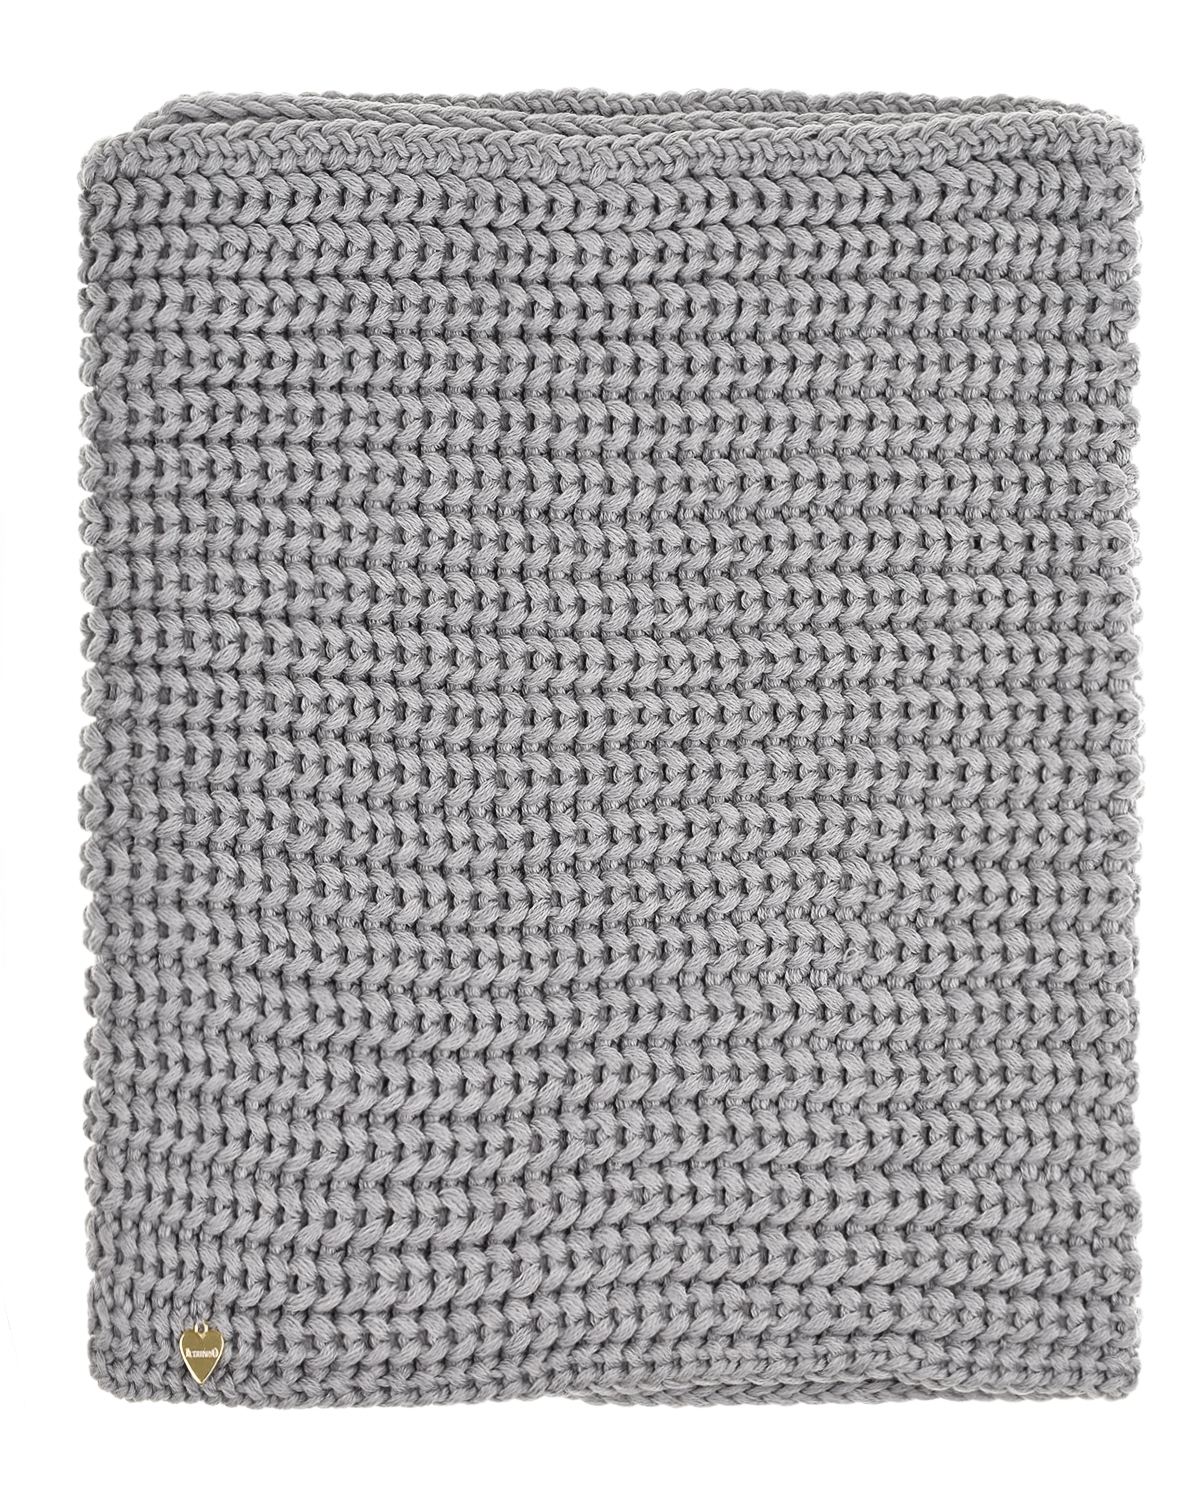 Серый снуд крупной вязки, 112x31см Il Trenino детский, размер unica - фото 2